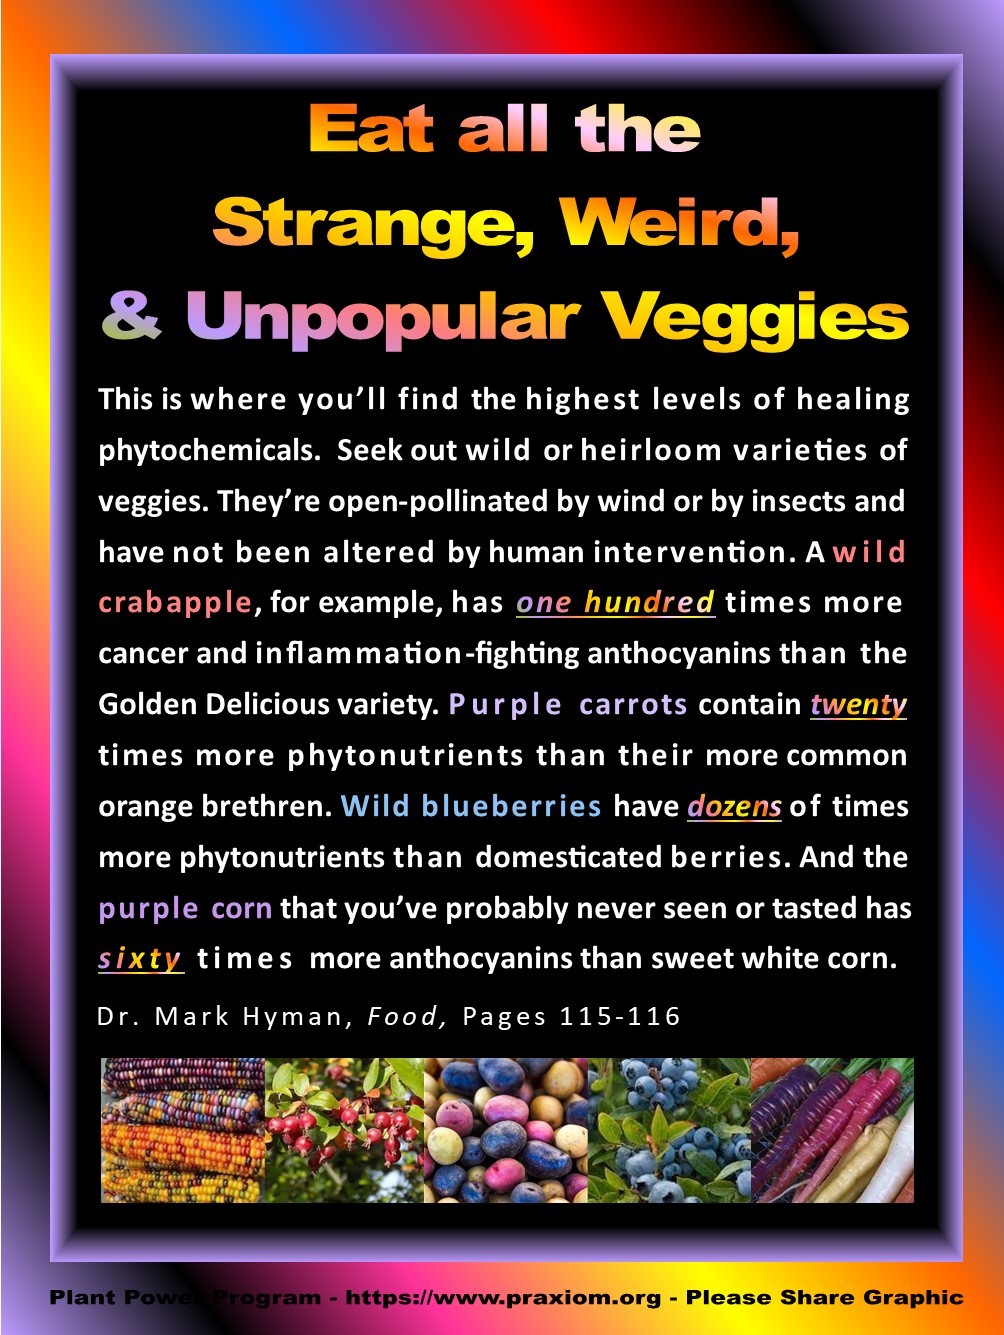 Eat Strange and Unusual Plants